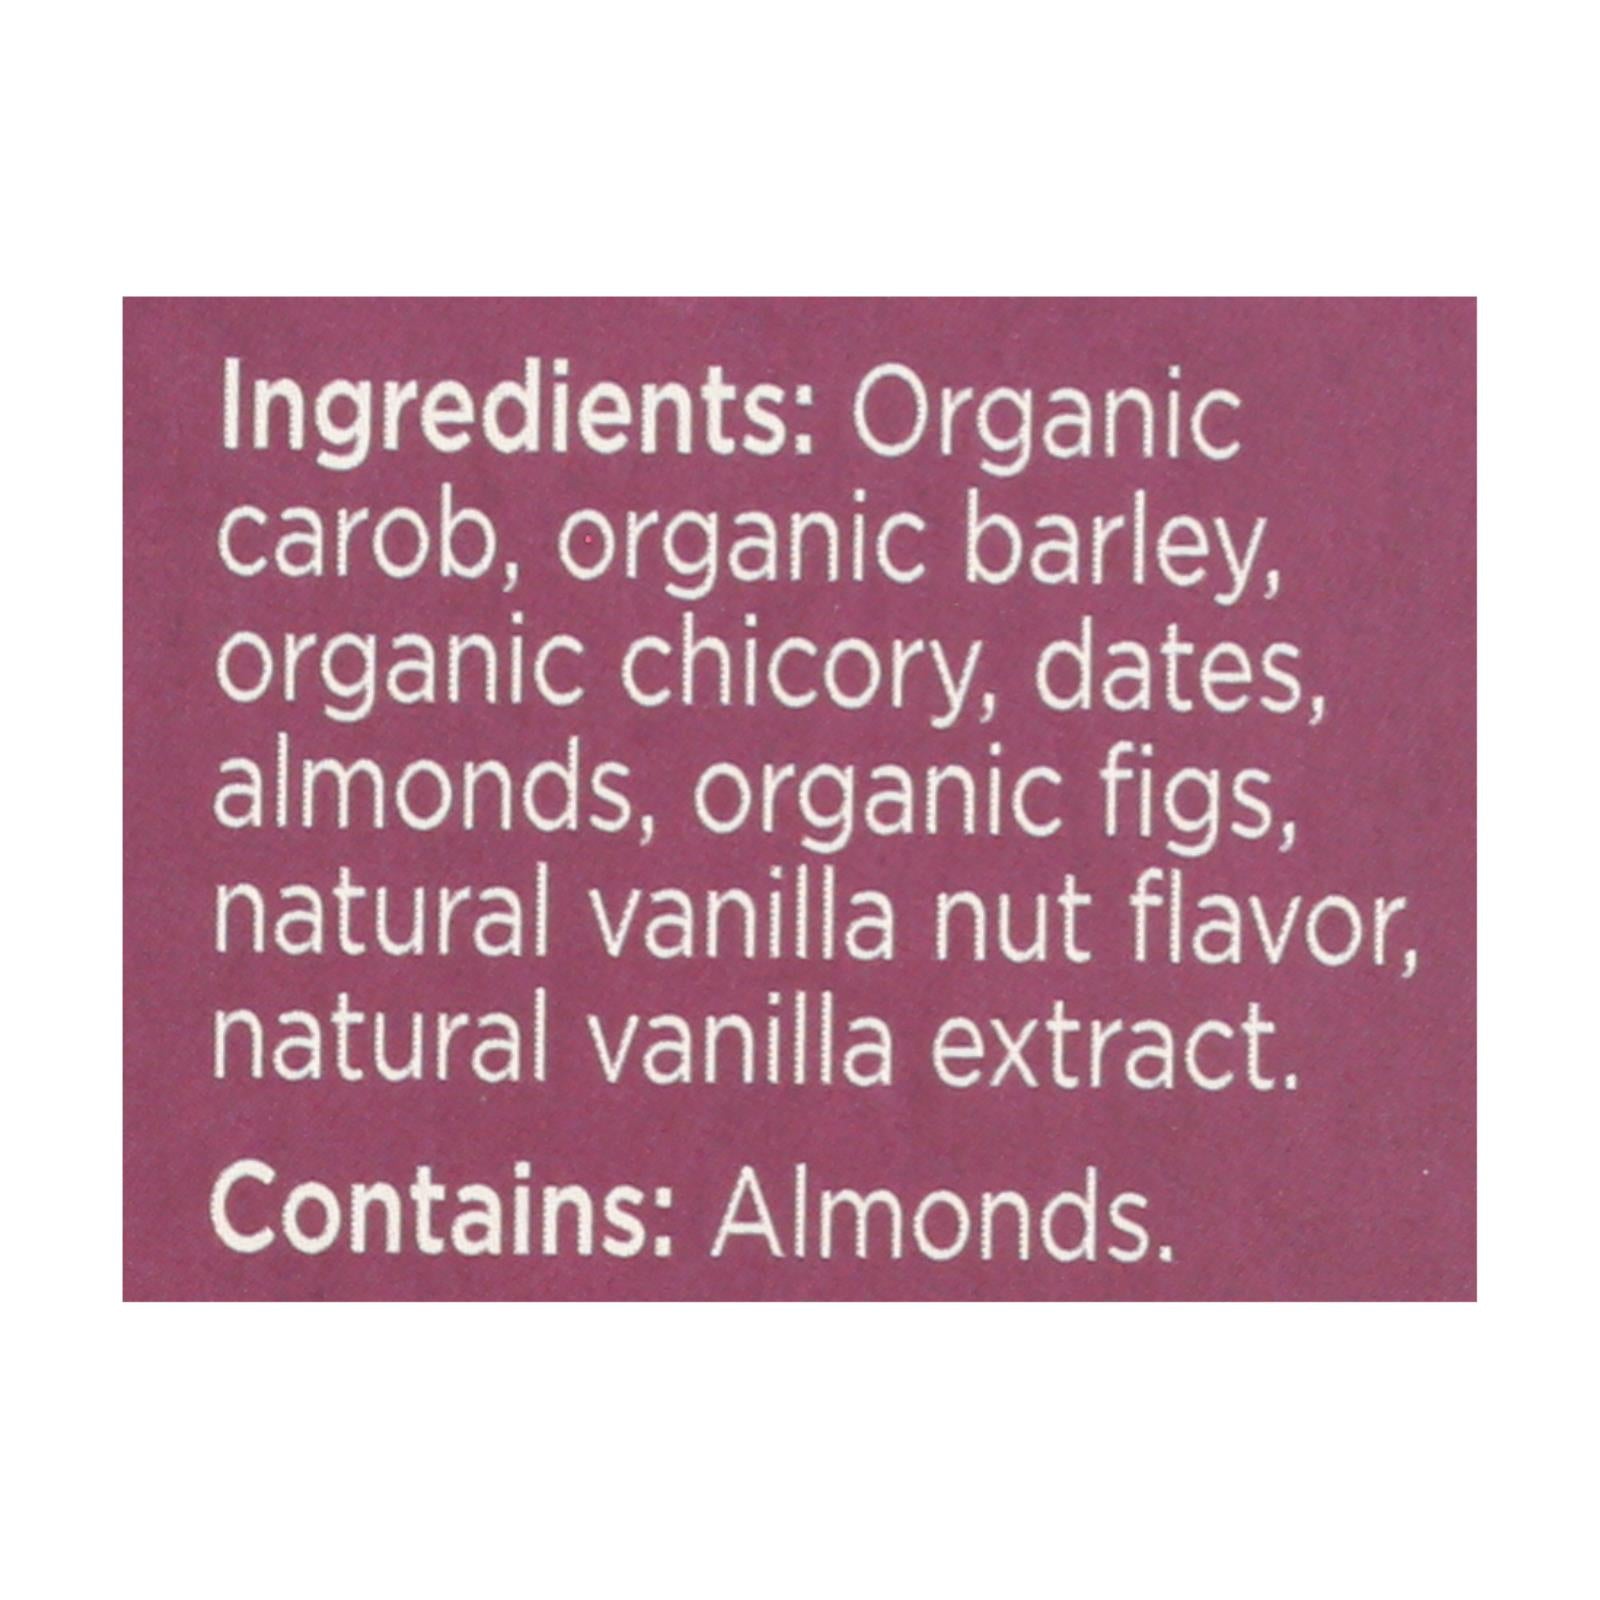 Teeccino Herbal Coffee Vanilla Nut - 10 Tea Bags - Case Of 6